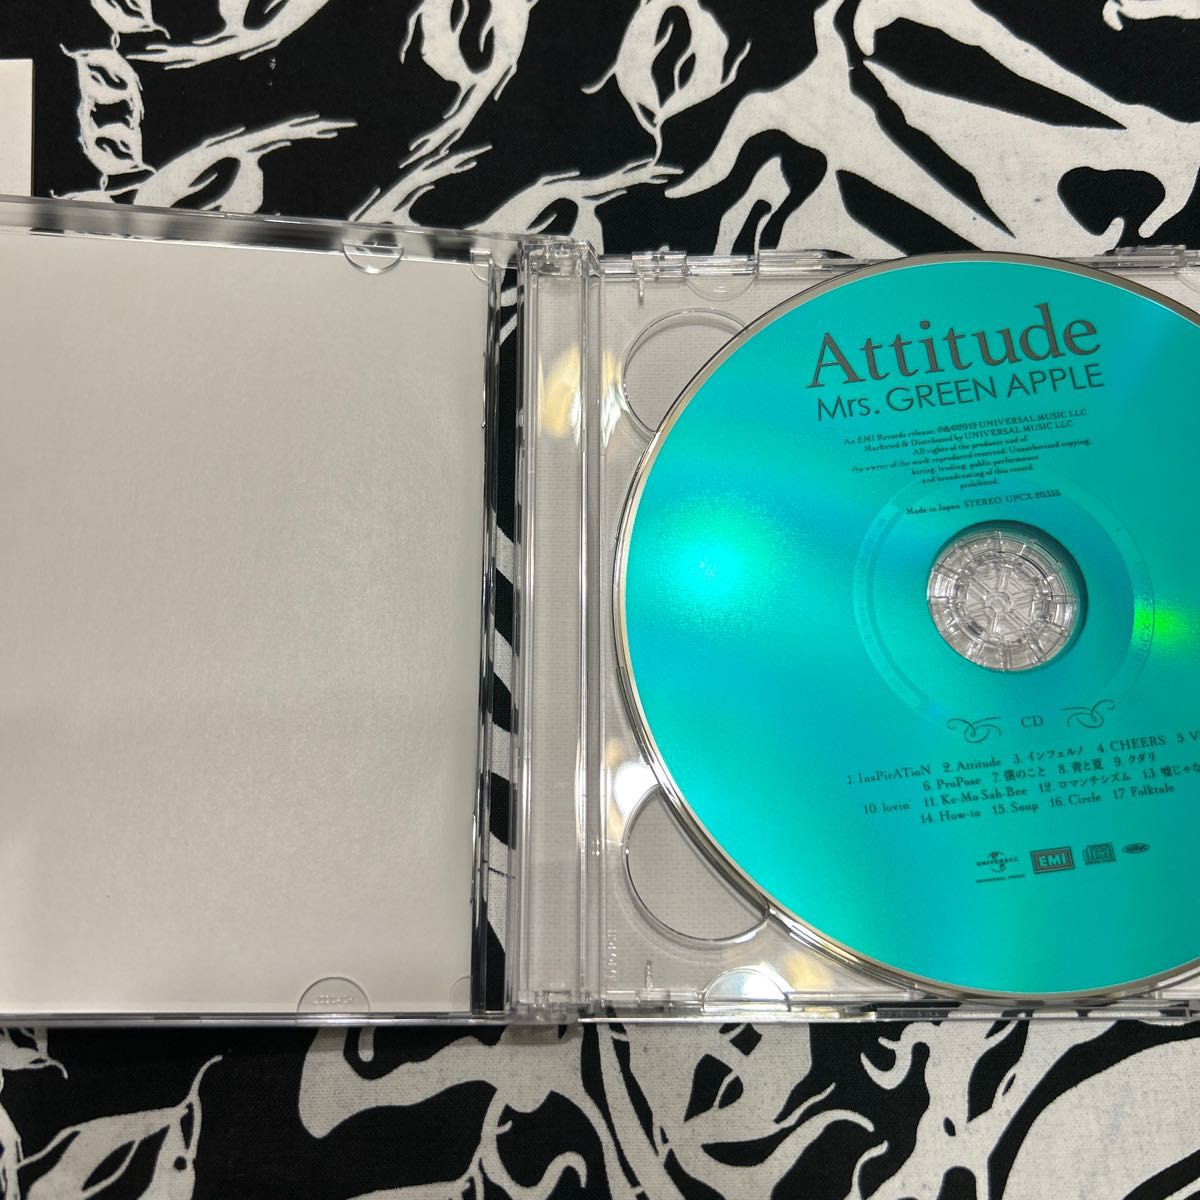 Attitude 初回限定盤 DVD付Mrs green apple｜PayPayフリマ